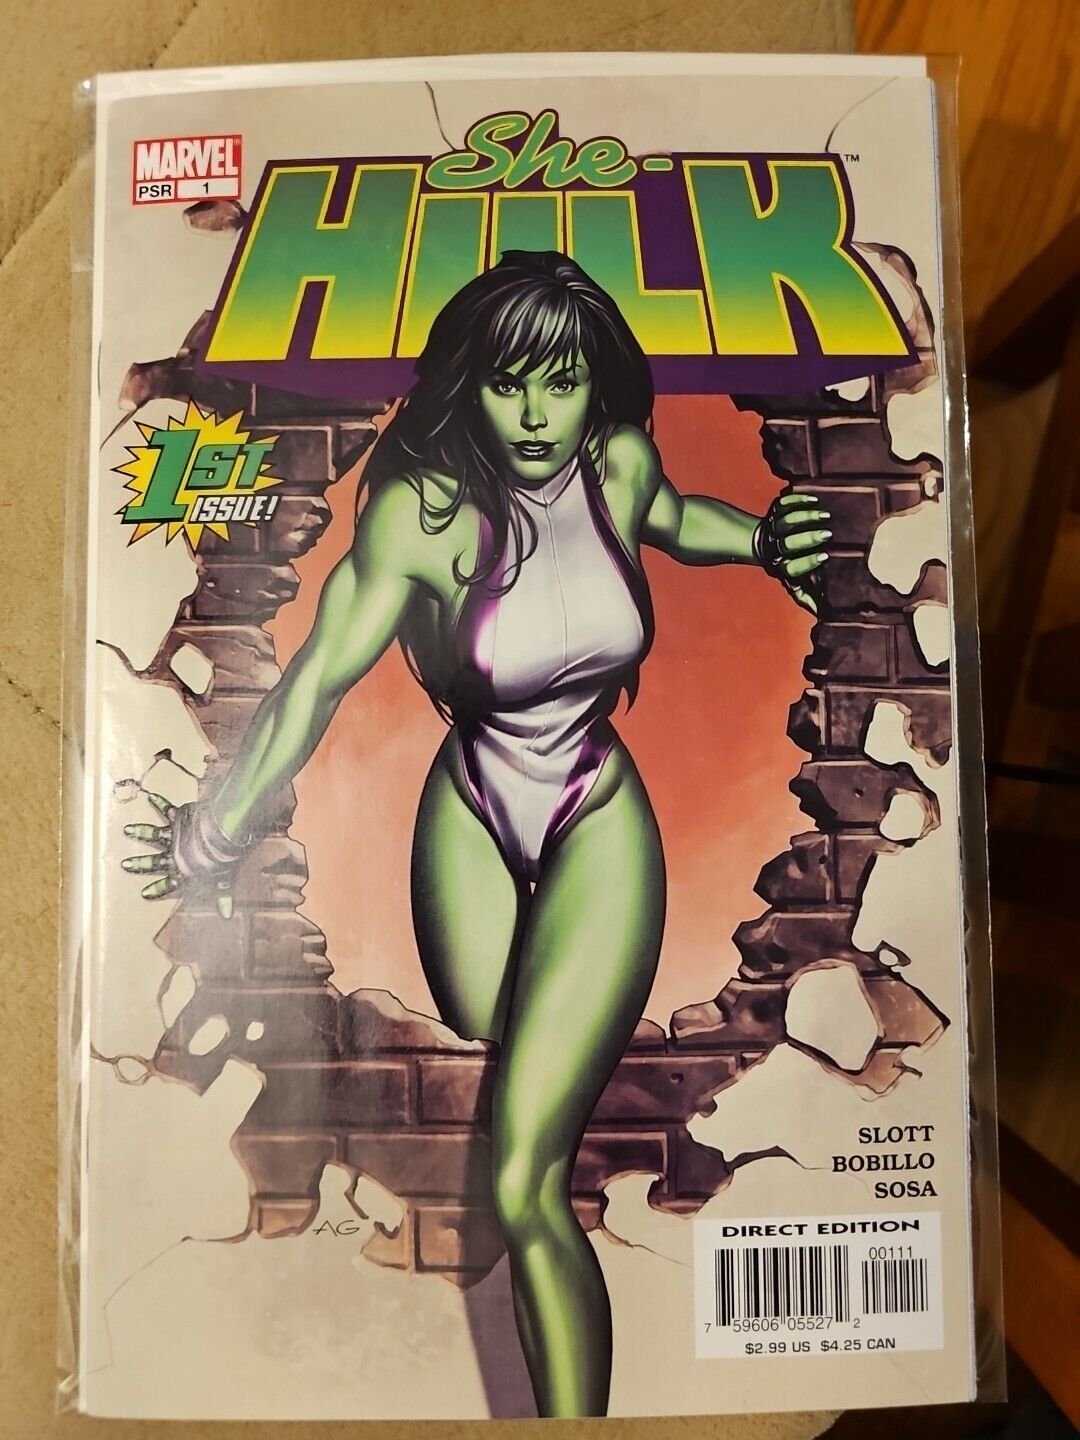 She-Hulk Vol. 1 #1 (May 2004), Slott/Bobillo, 1st app Mallory Book, Pug, NM-/NM 